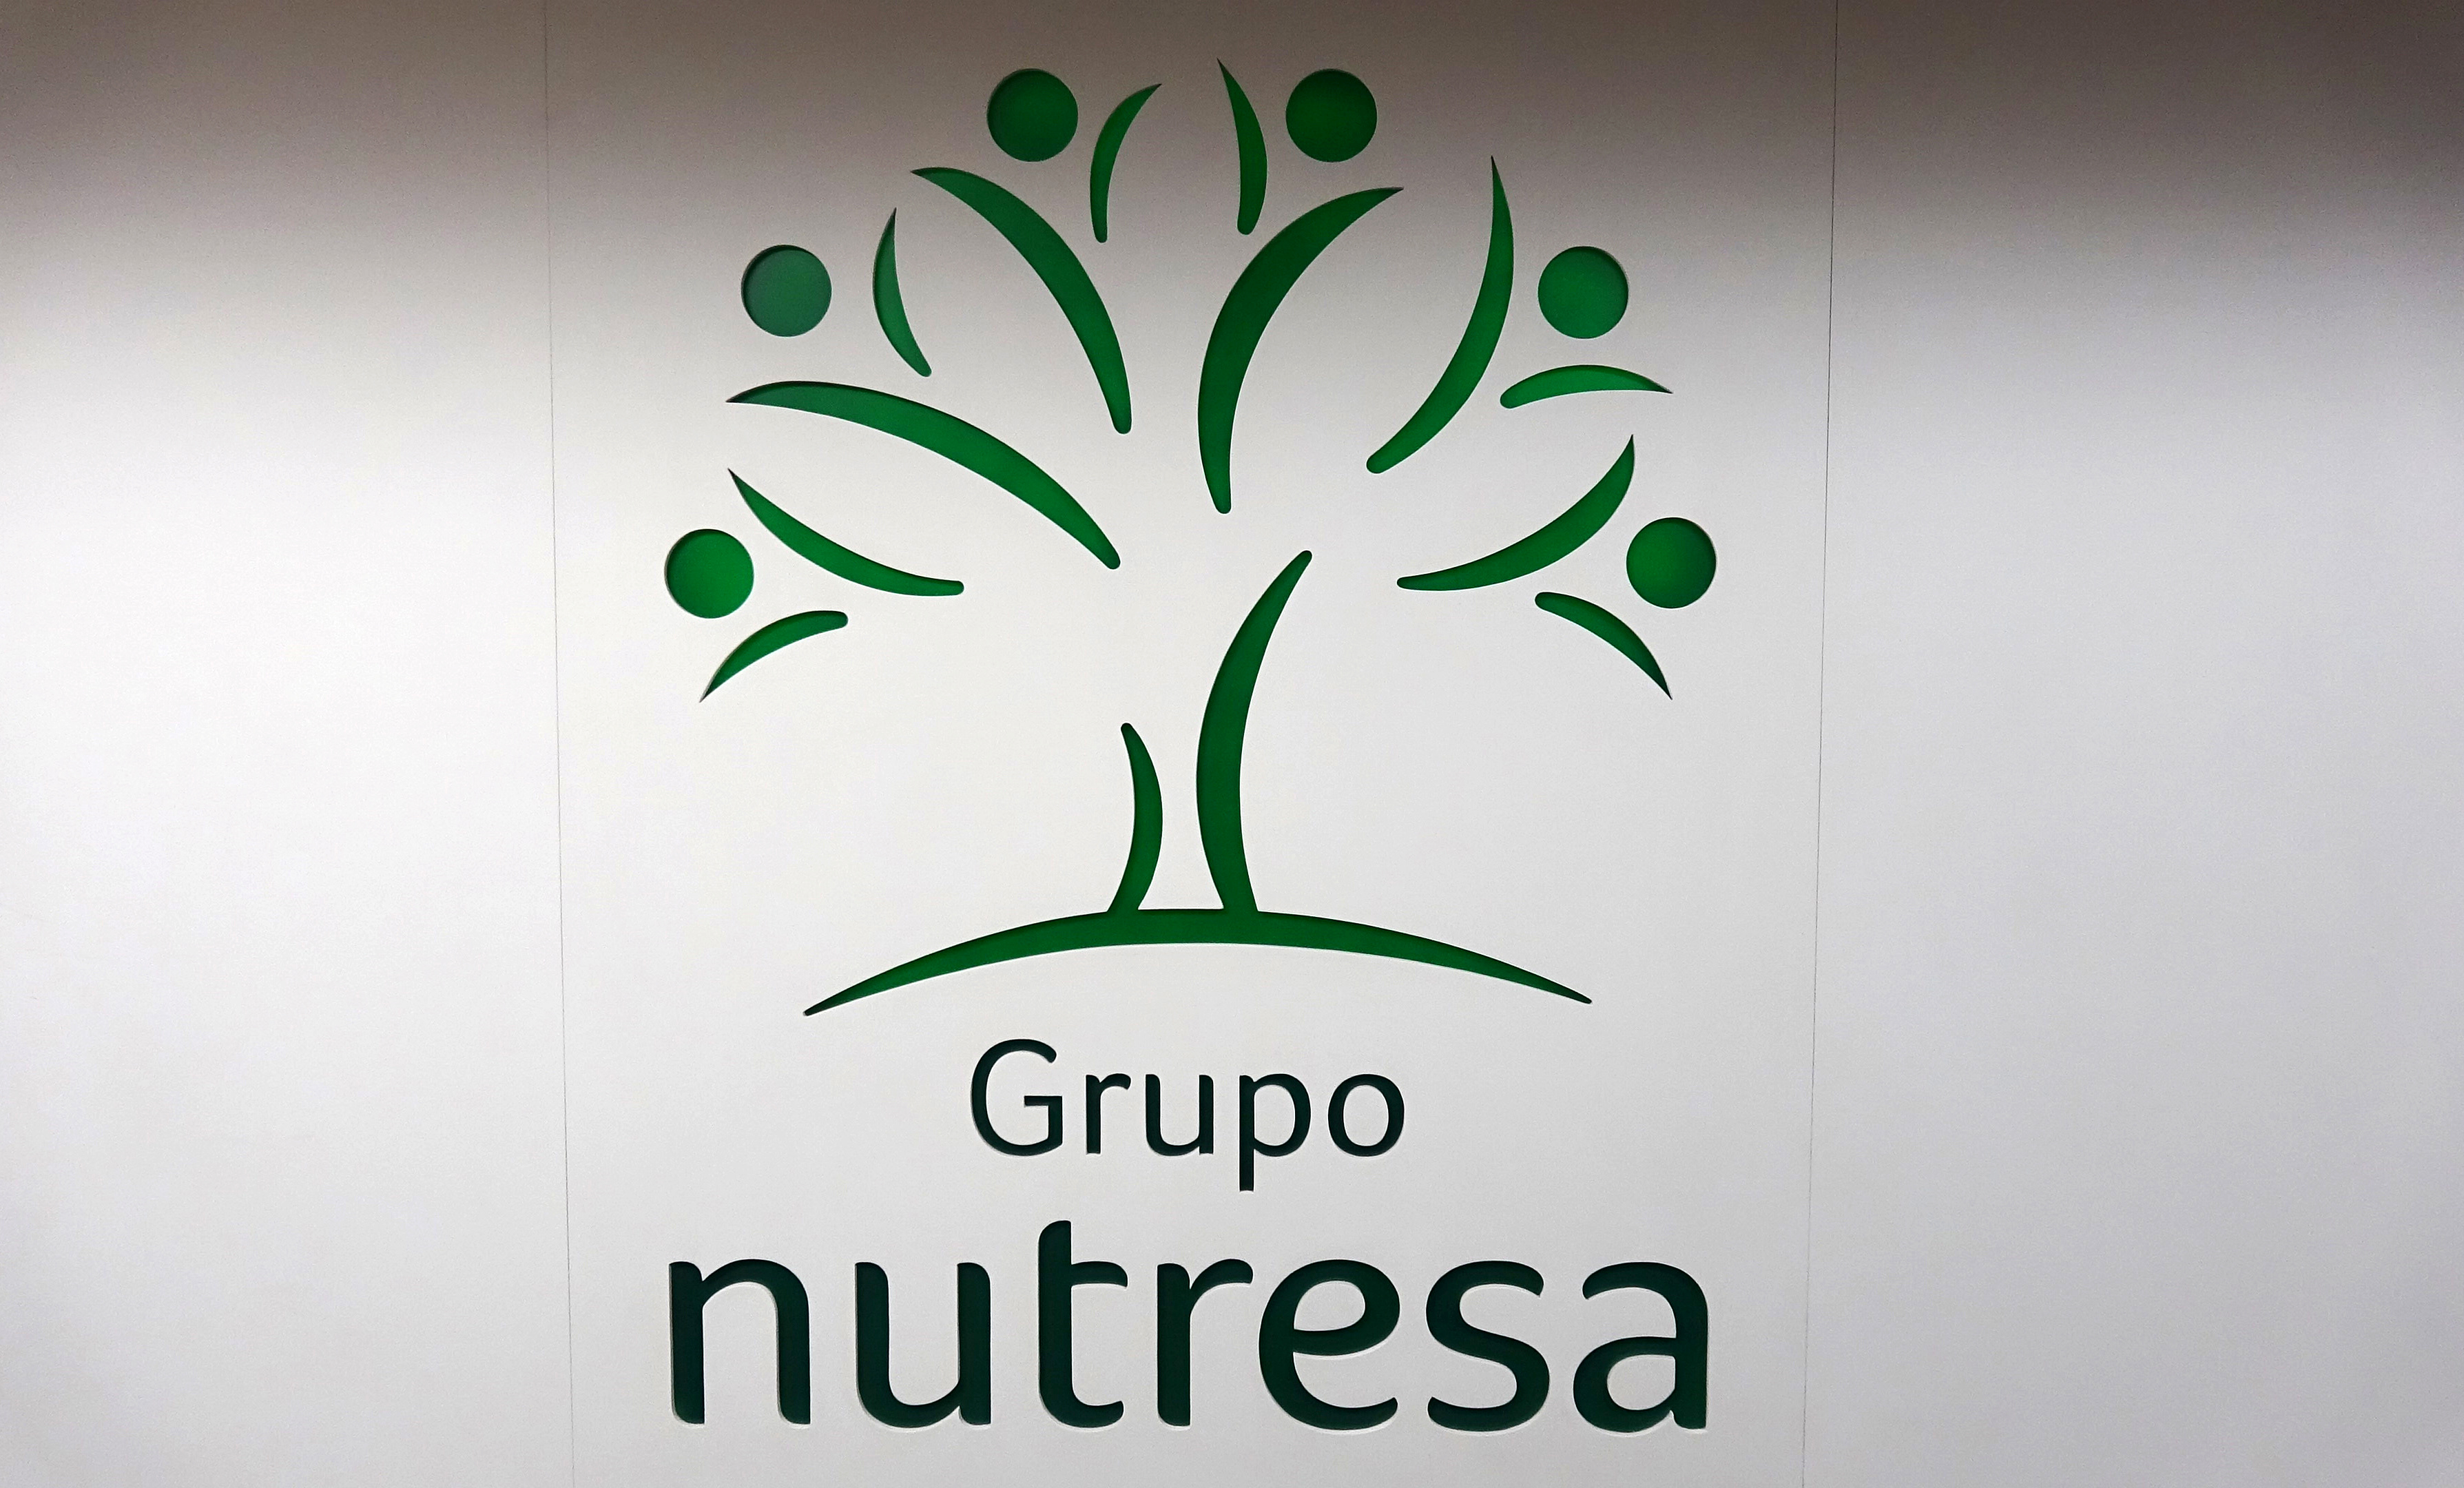 FILE PHOTO:The logo of Nutresa is seen in Medellin